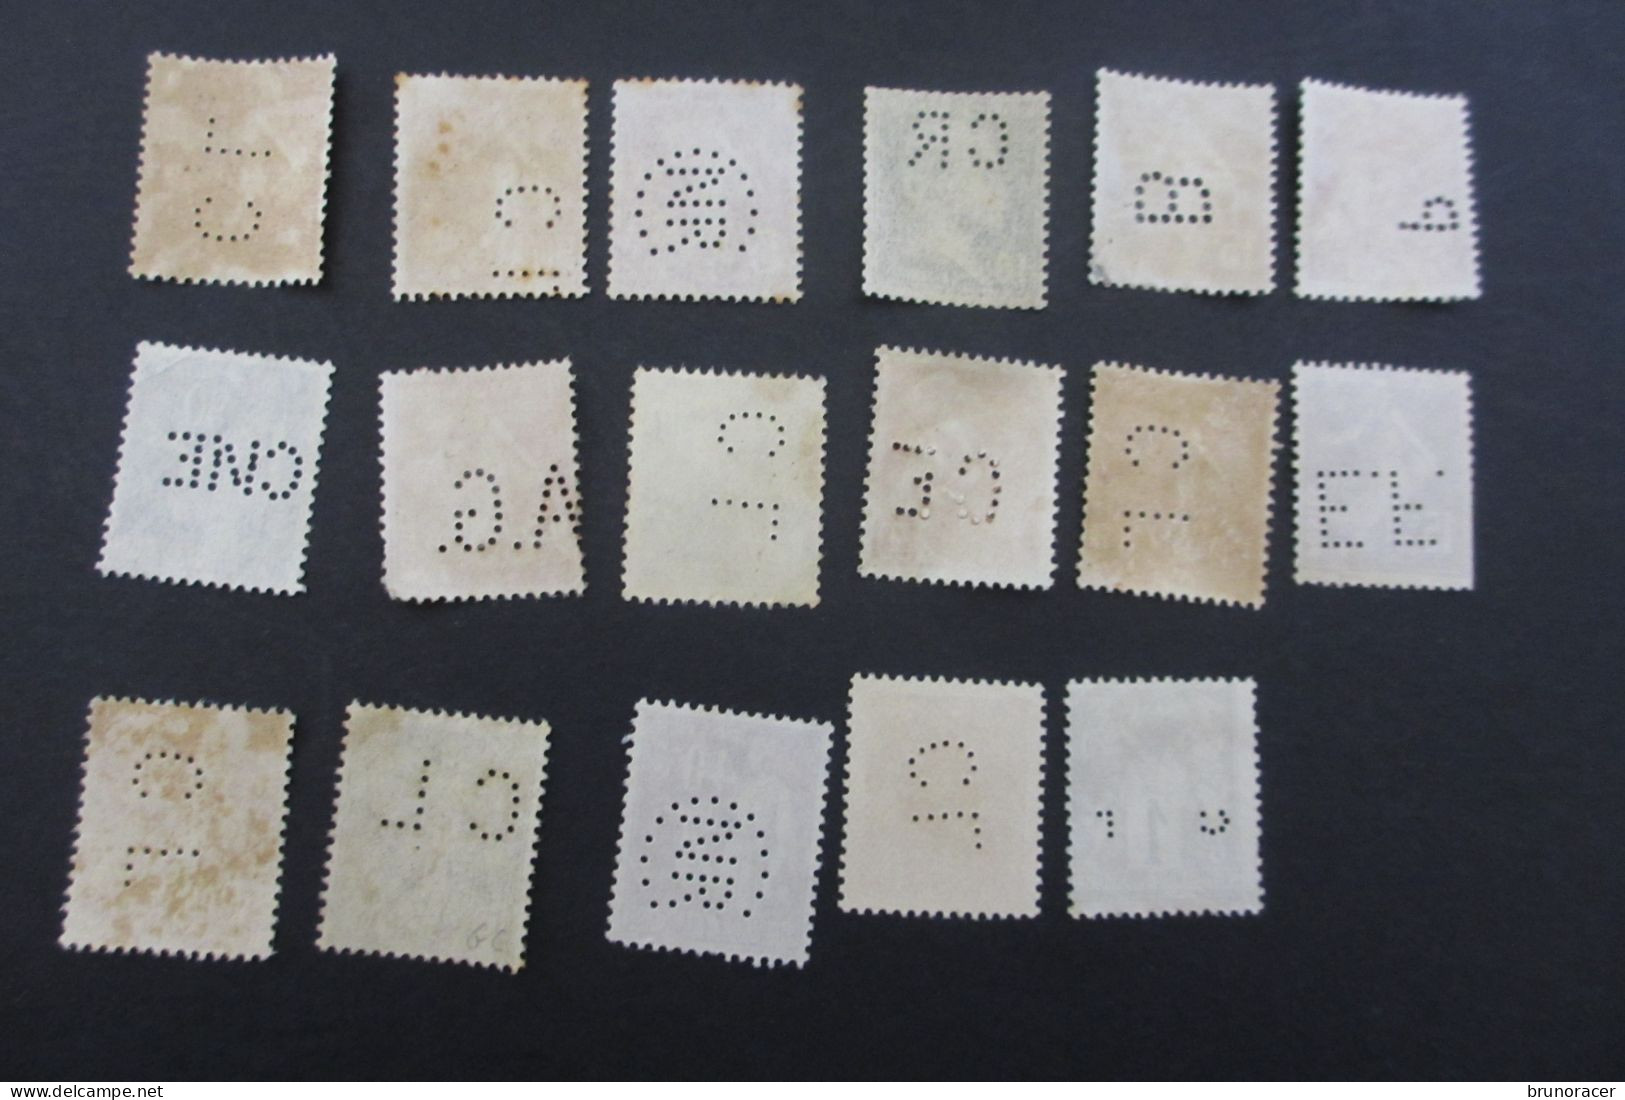 LOT FRANCE 17 TIMBRES PERFORES NEUFS SURTOUT SANS GOMME VOIR SCANS - Unused Stamps